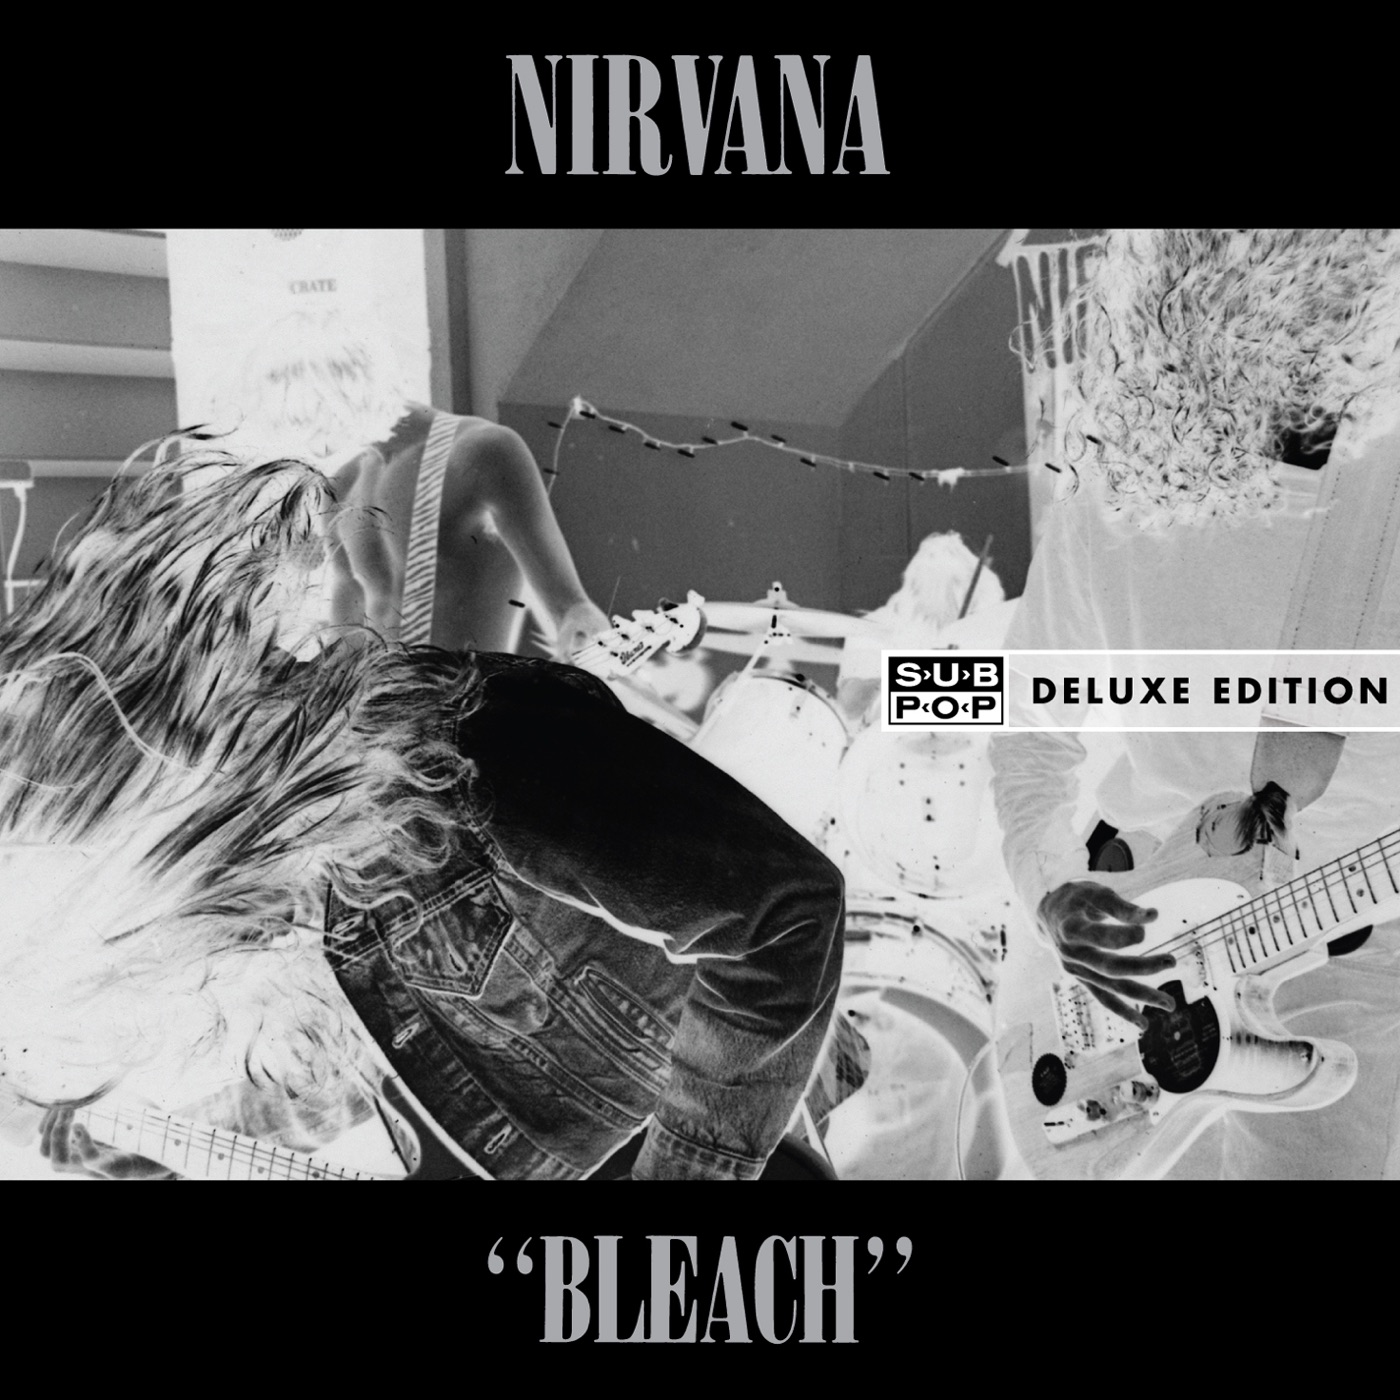 Bleach by Nirvana